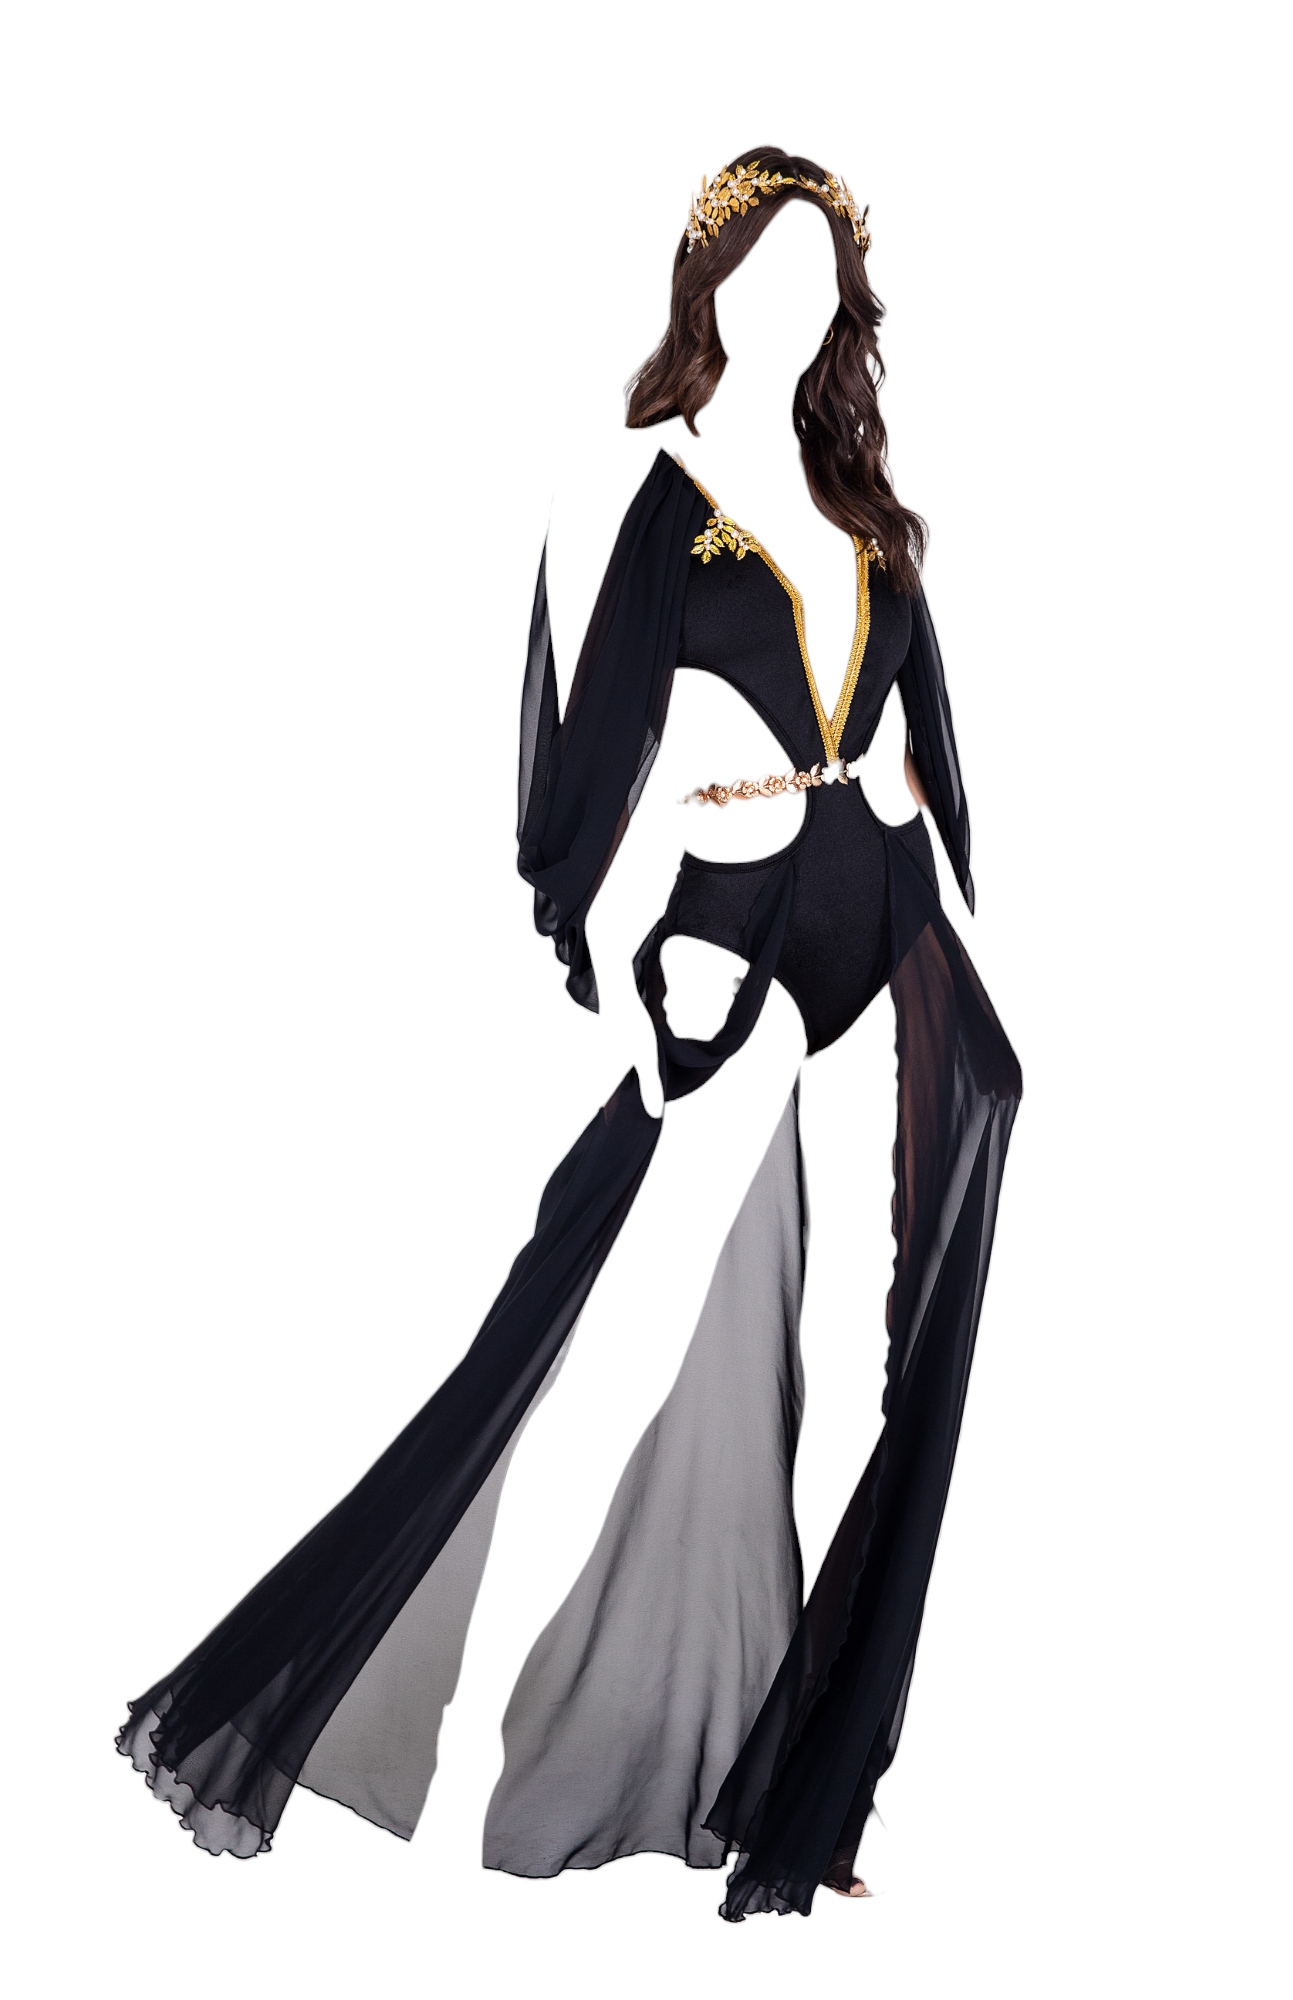 Roma Costume 2 PC Divine Goddess Bodysuit with Train Costume Black/Gold